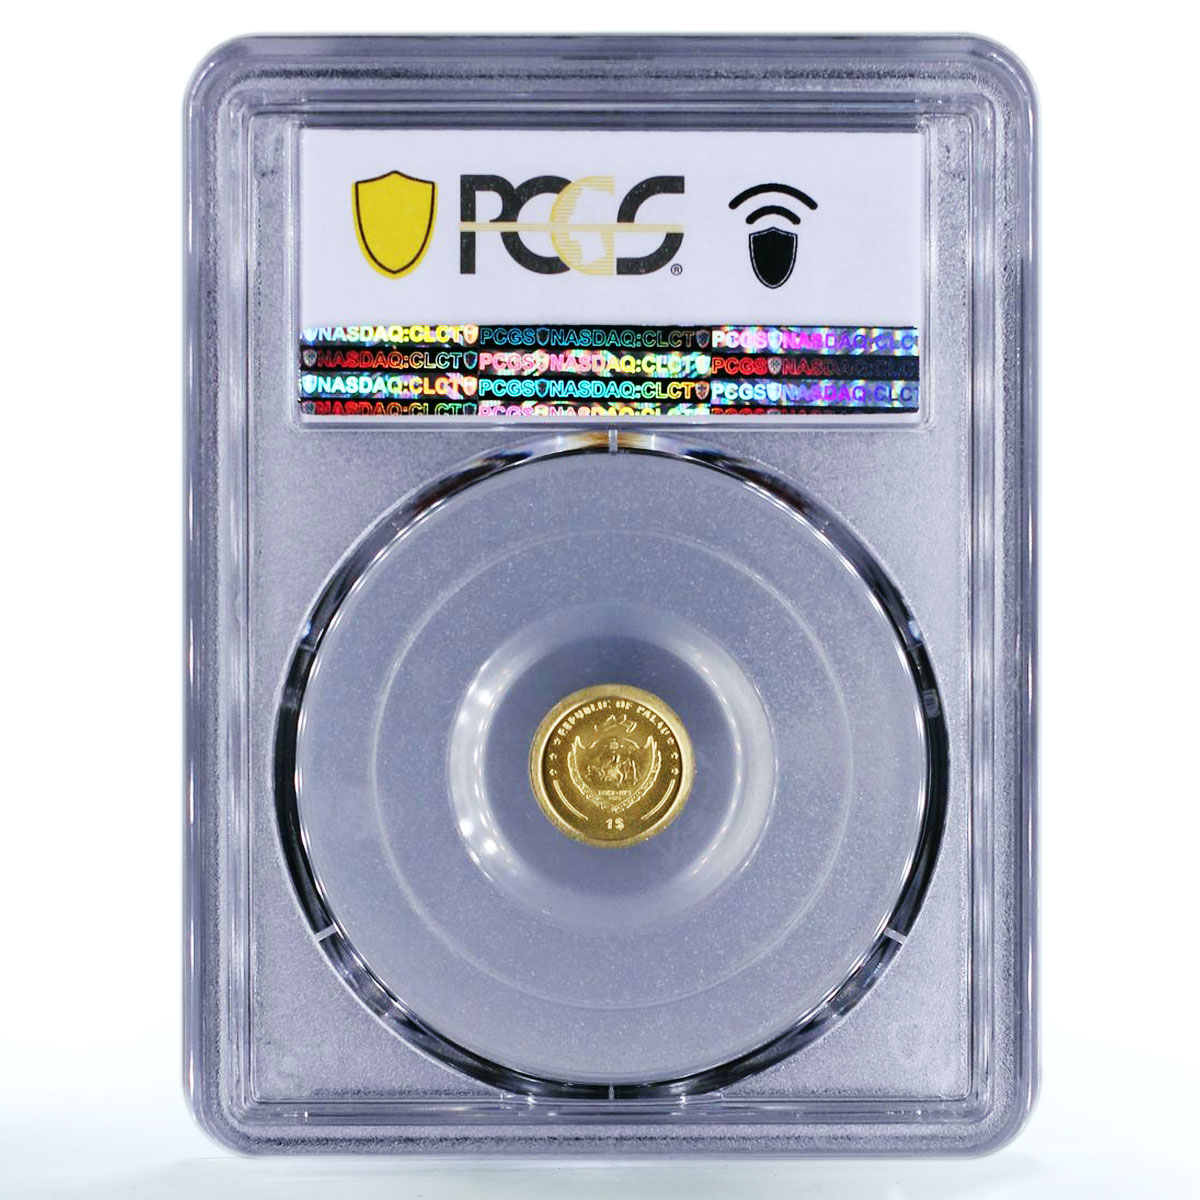 Palau 1 dollar Roman Empire Series Constantine MS70 PCGS gold coin 2012